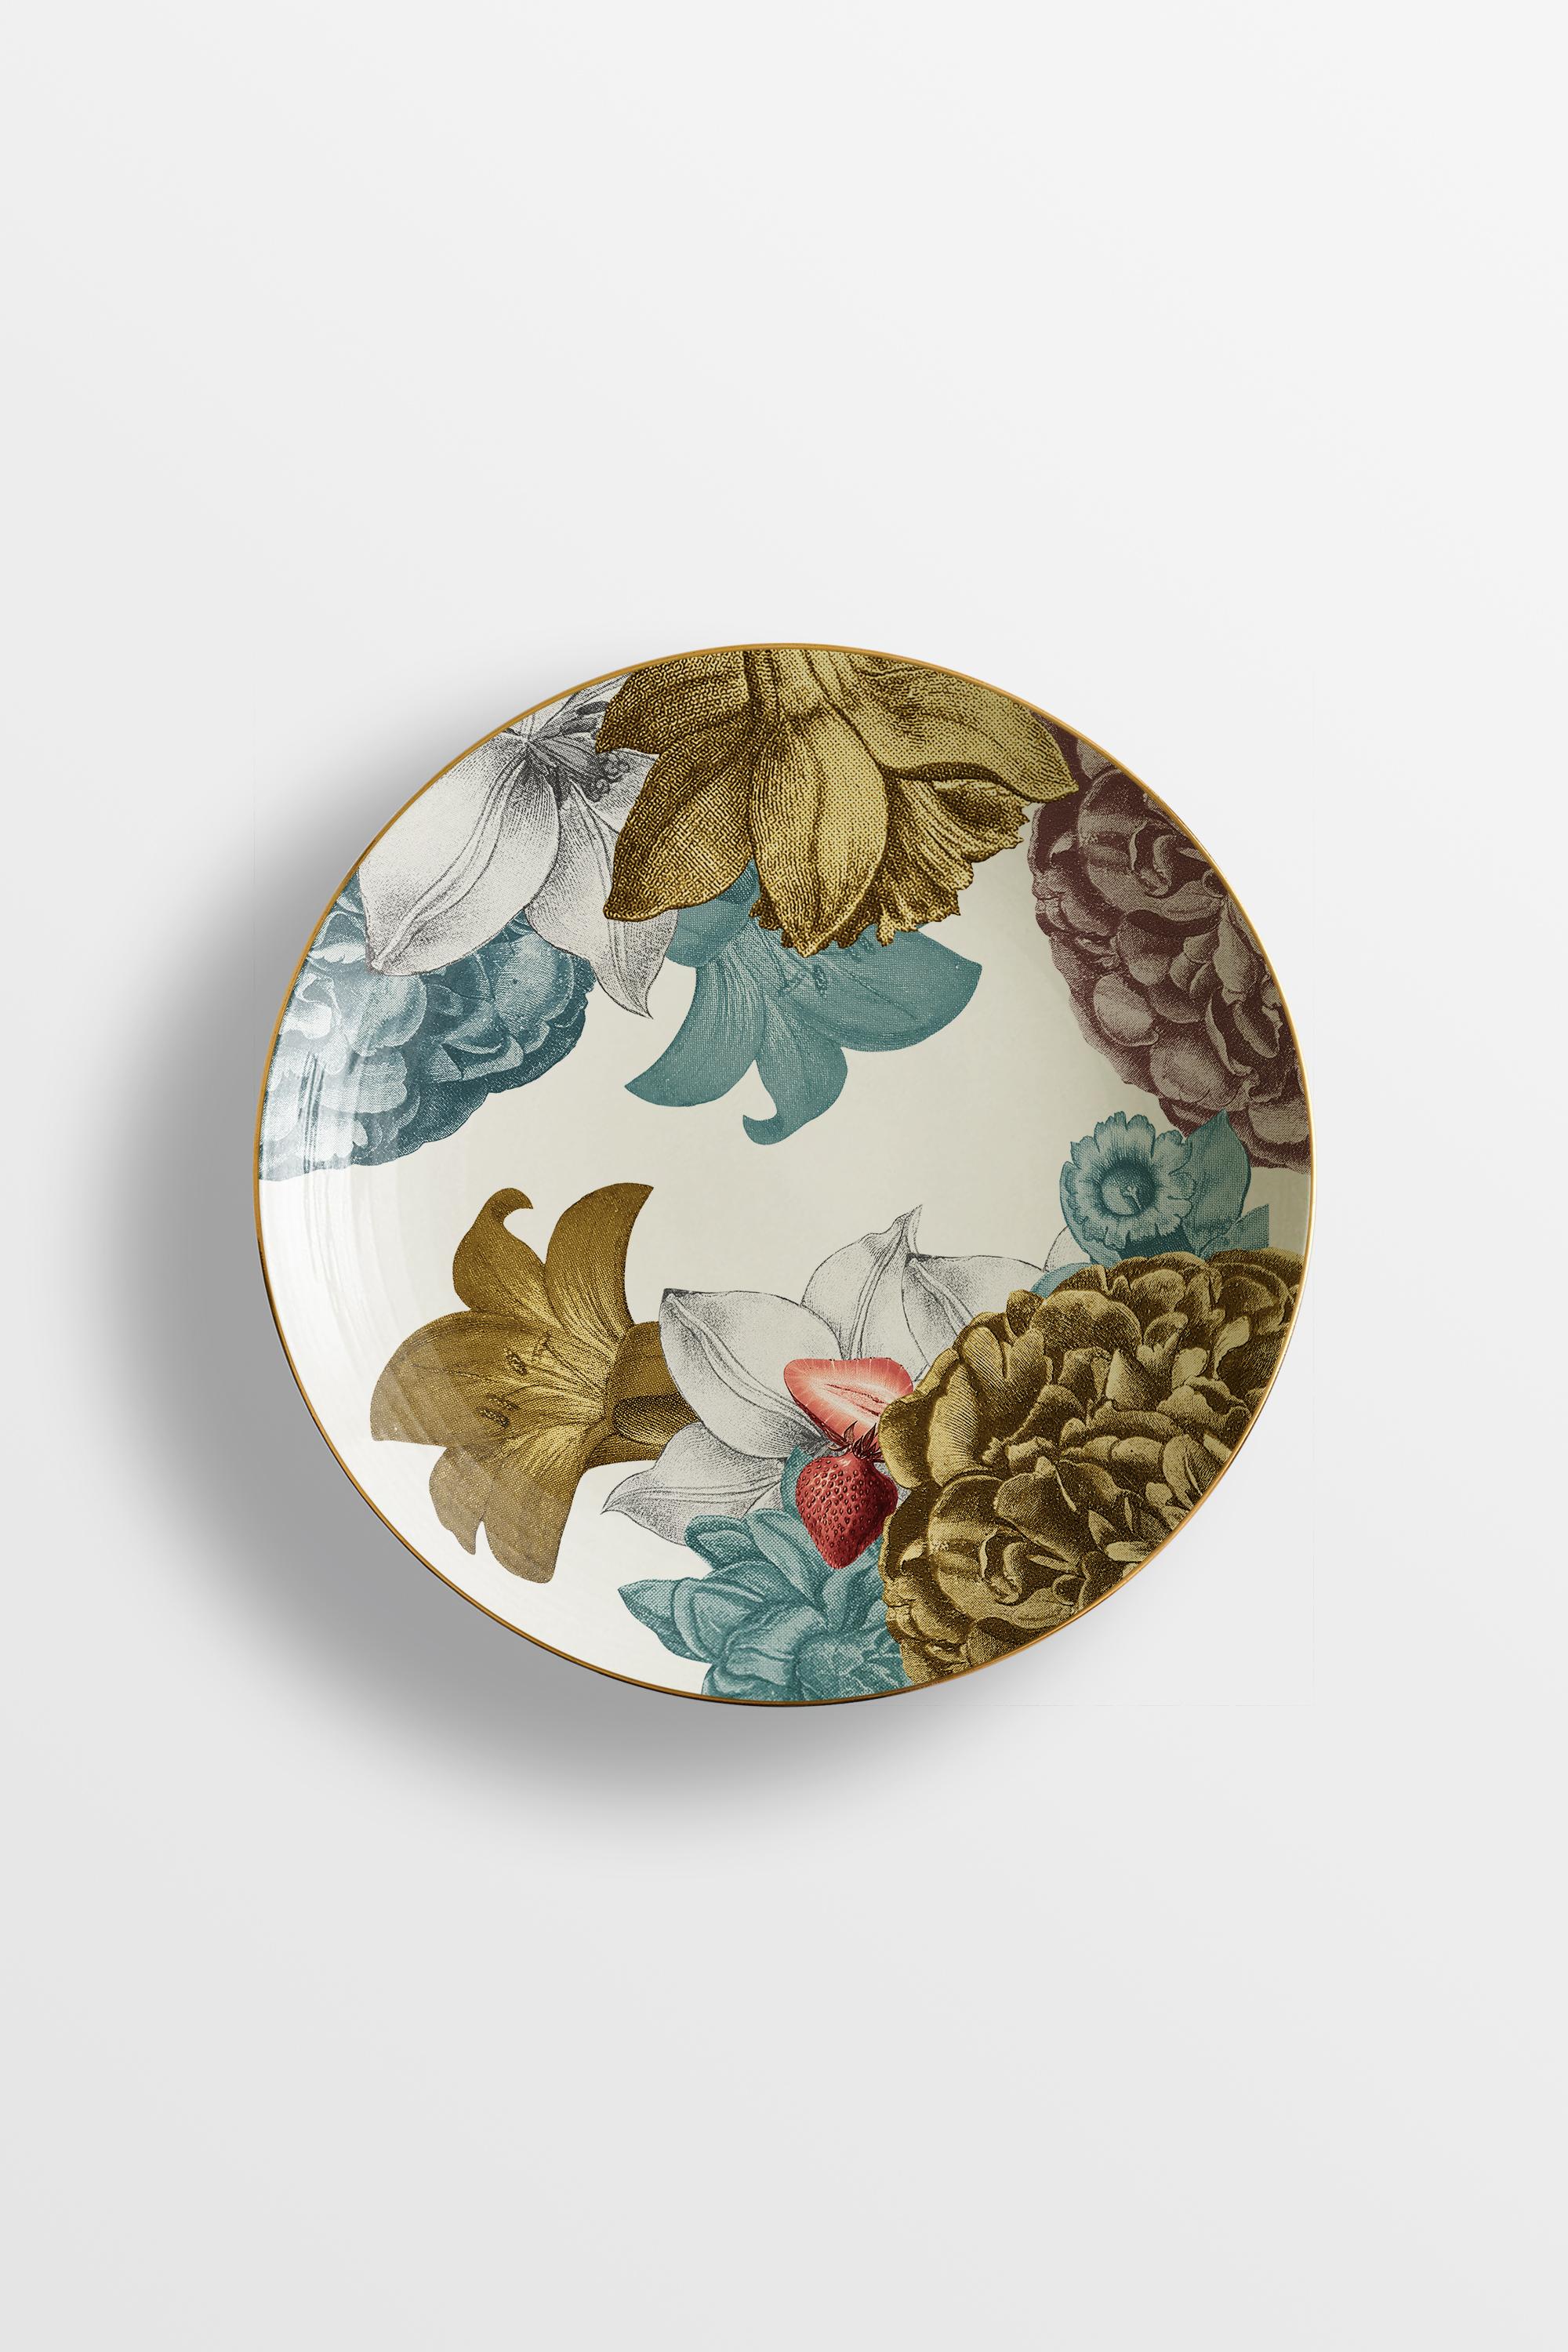 Cairo, Six Contemporary Porcelain Soup Plates with Decorative Design For Sale 3